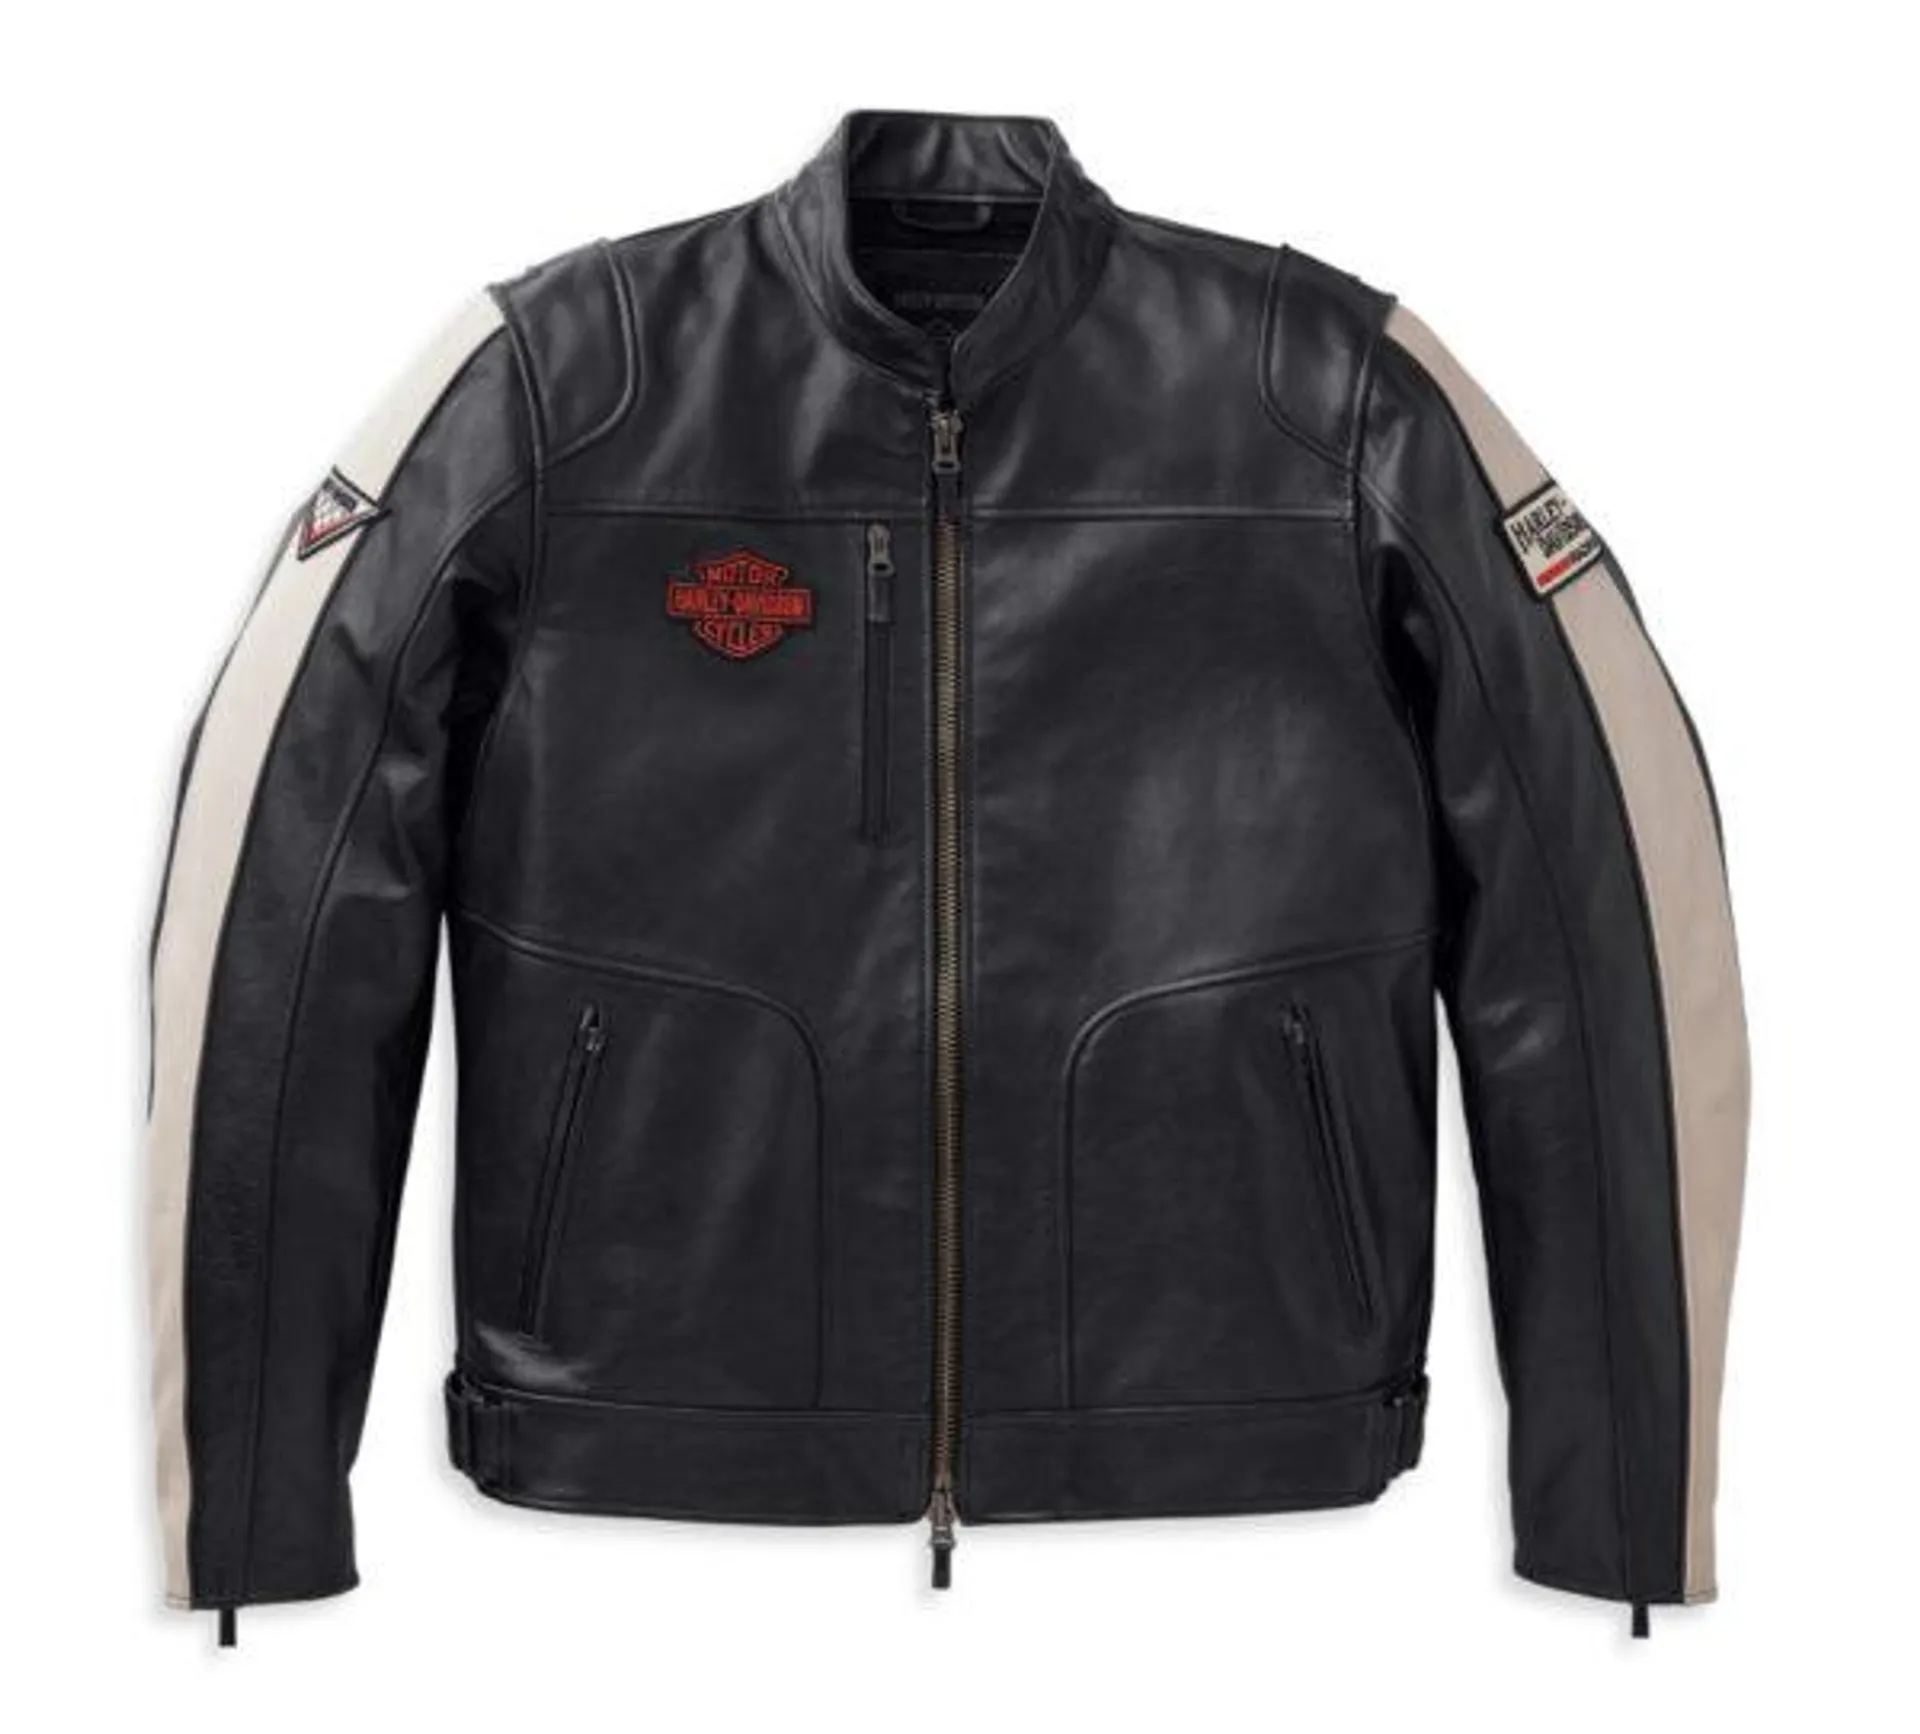 Men’s Enduro Leather Riding Jacket